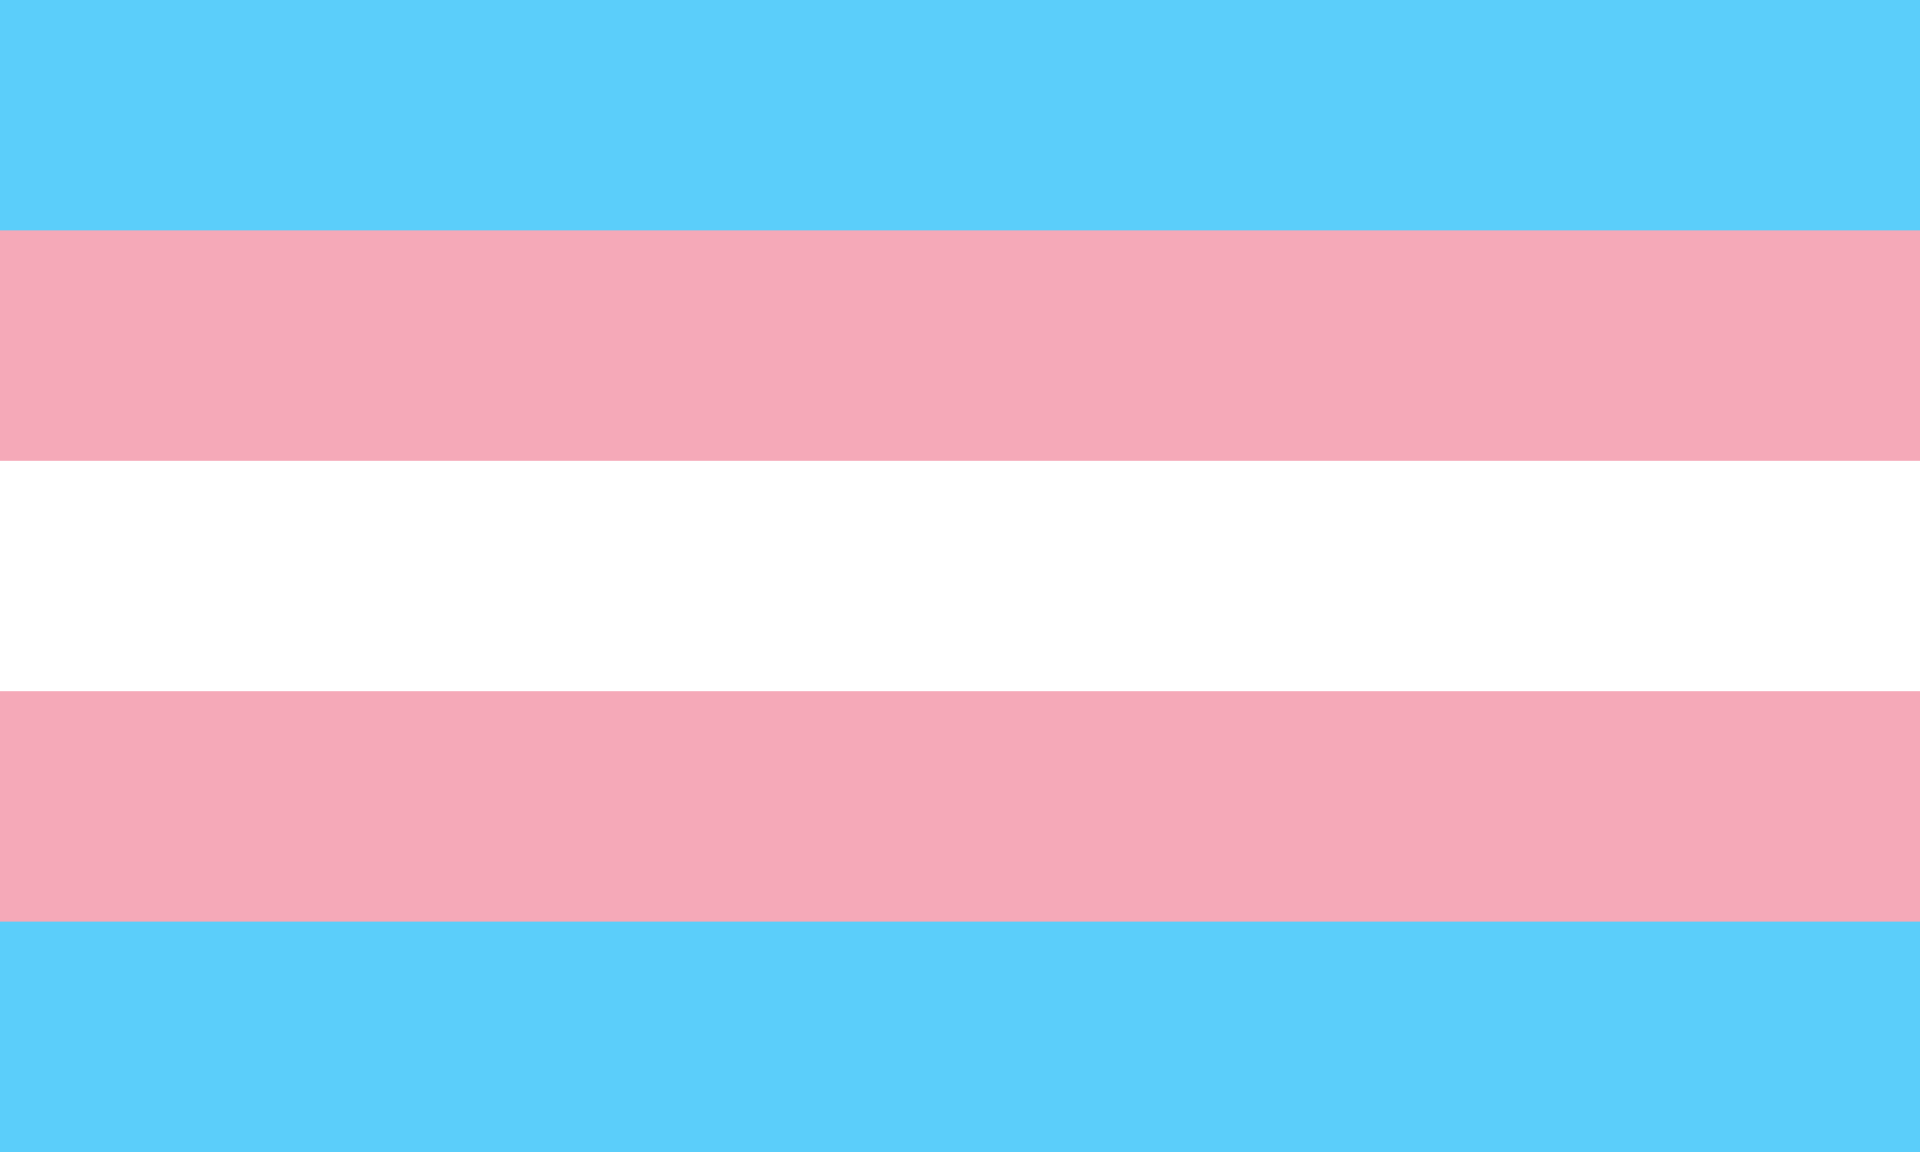 the trans pride flag